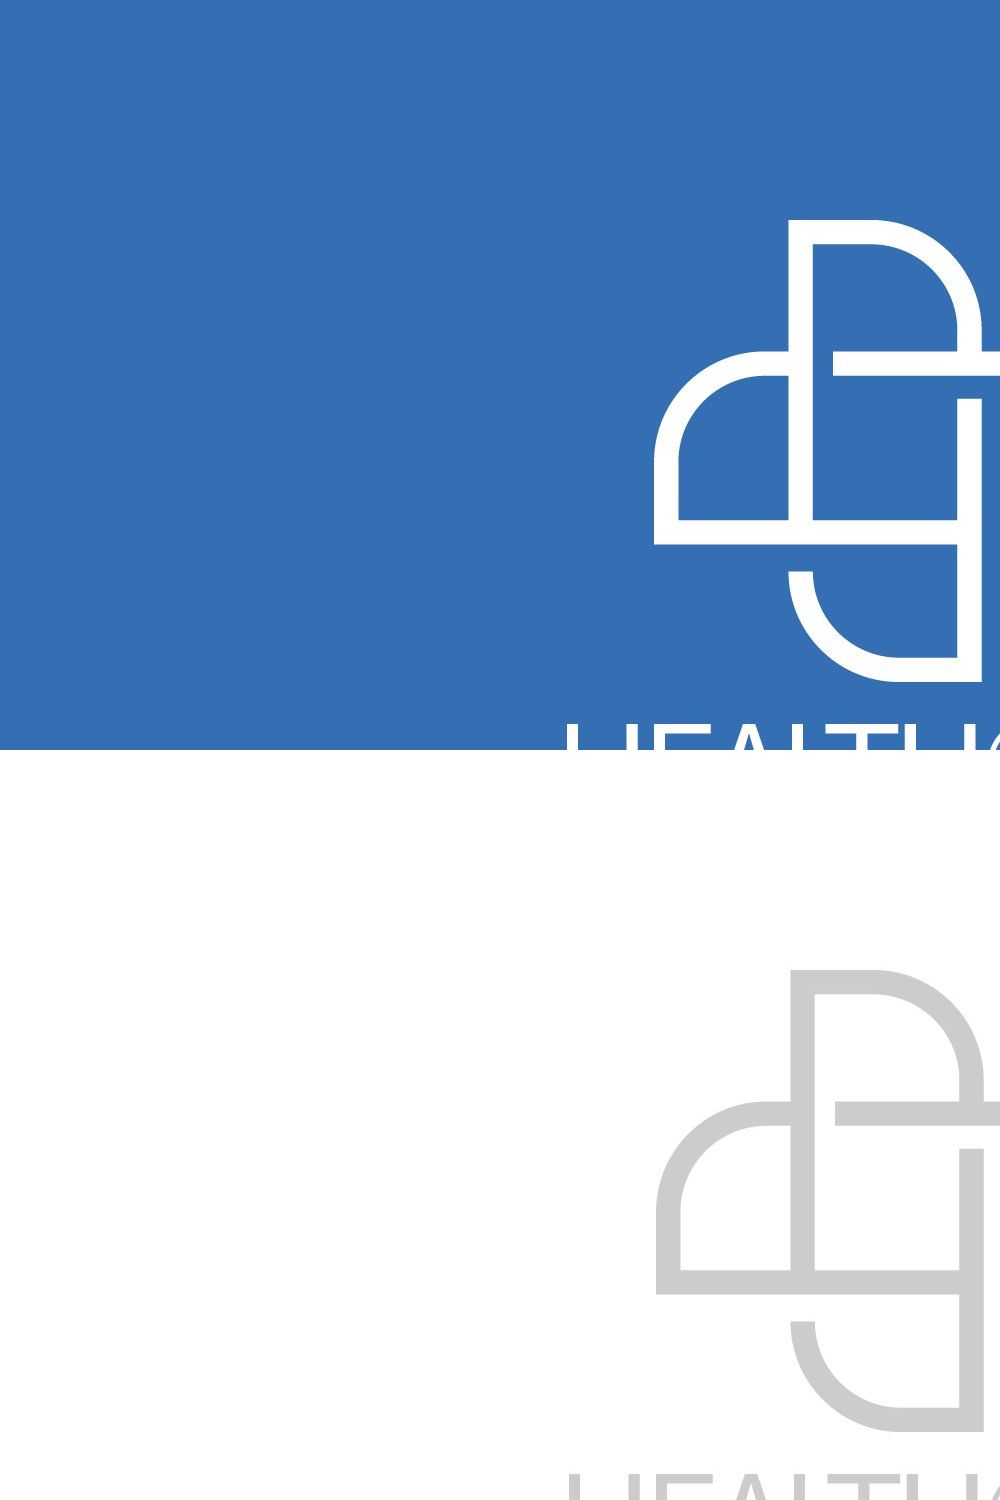 Health care logo, Medical logo pinterest preview image.